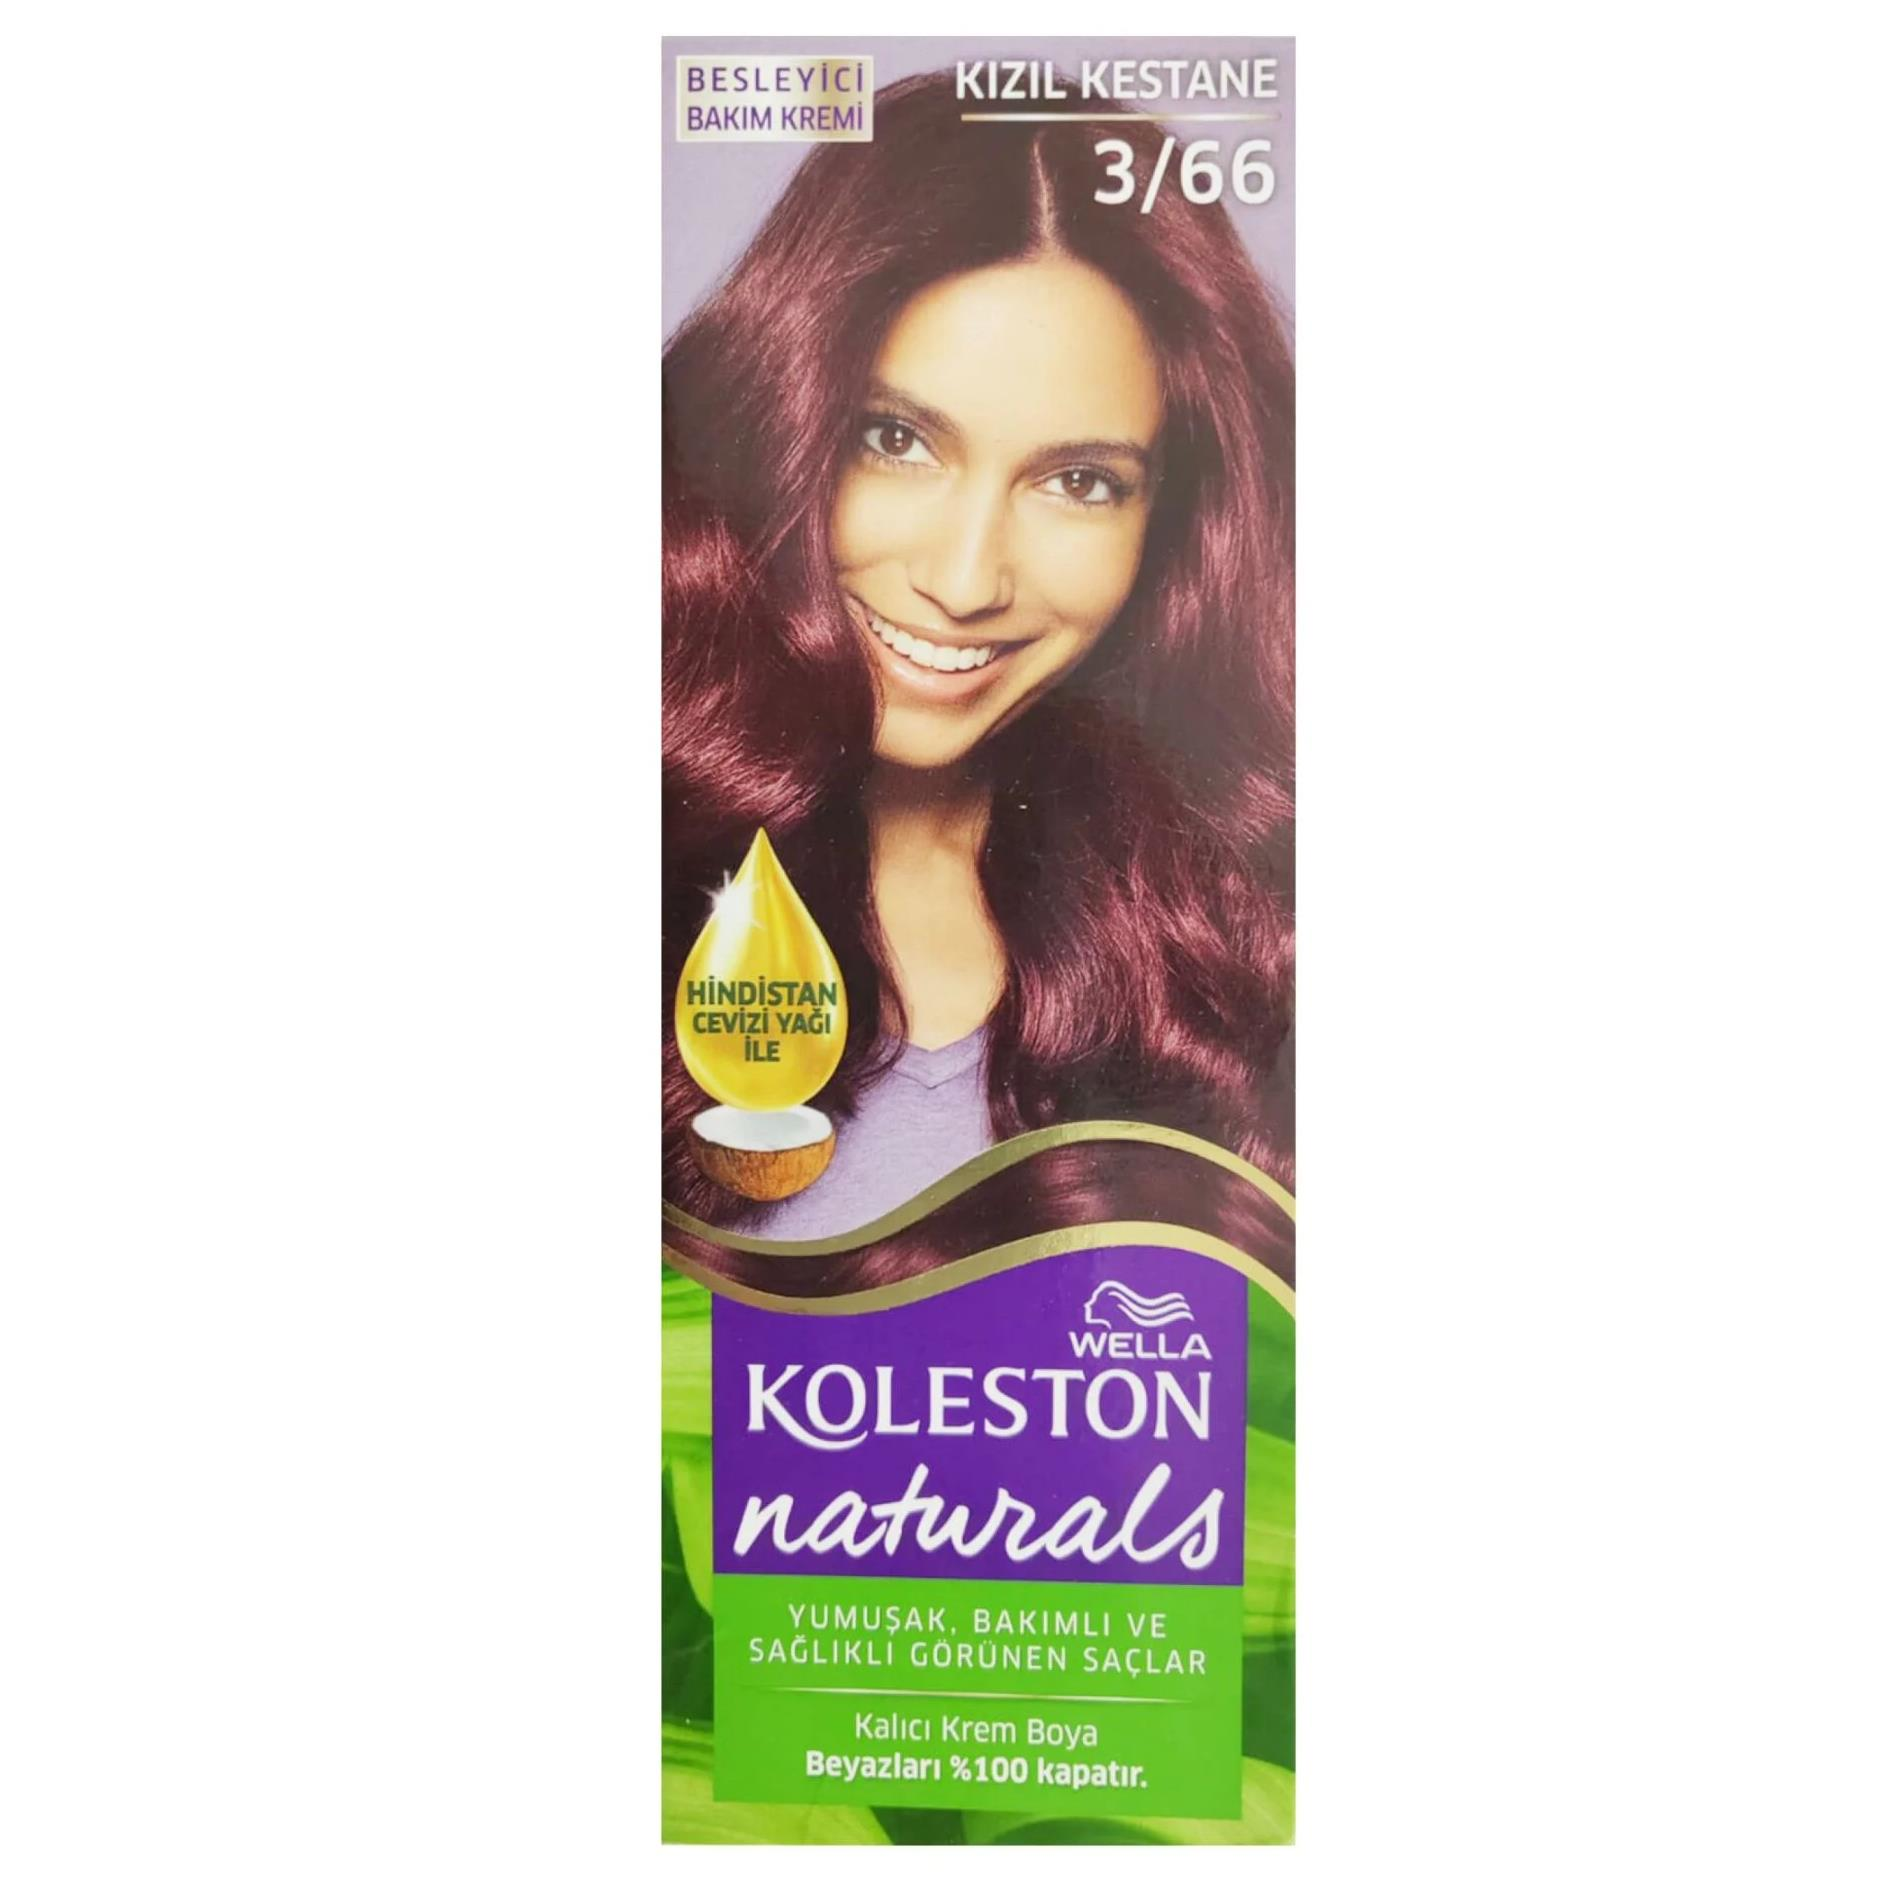 Koleston Naturals Saç Boyası 3/66 Kızıl Kestane